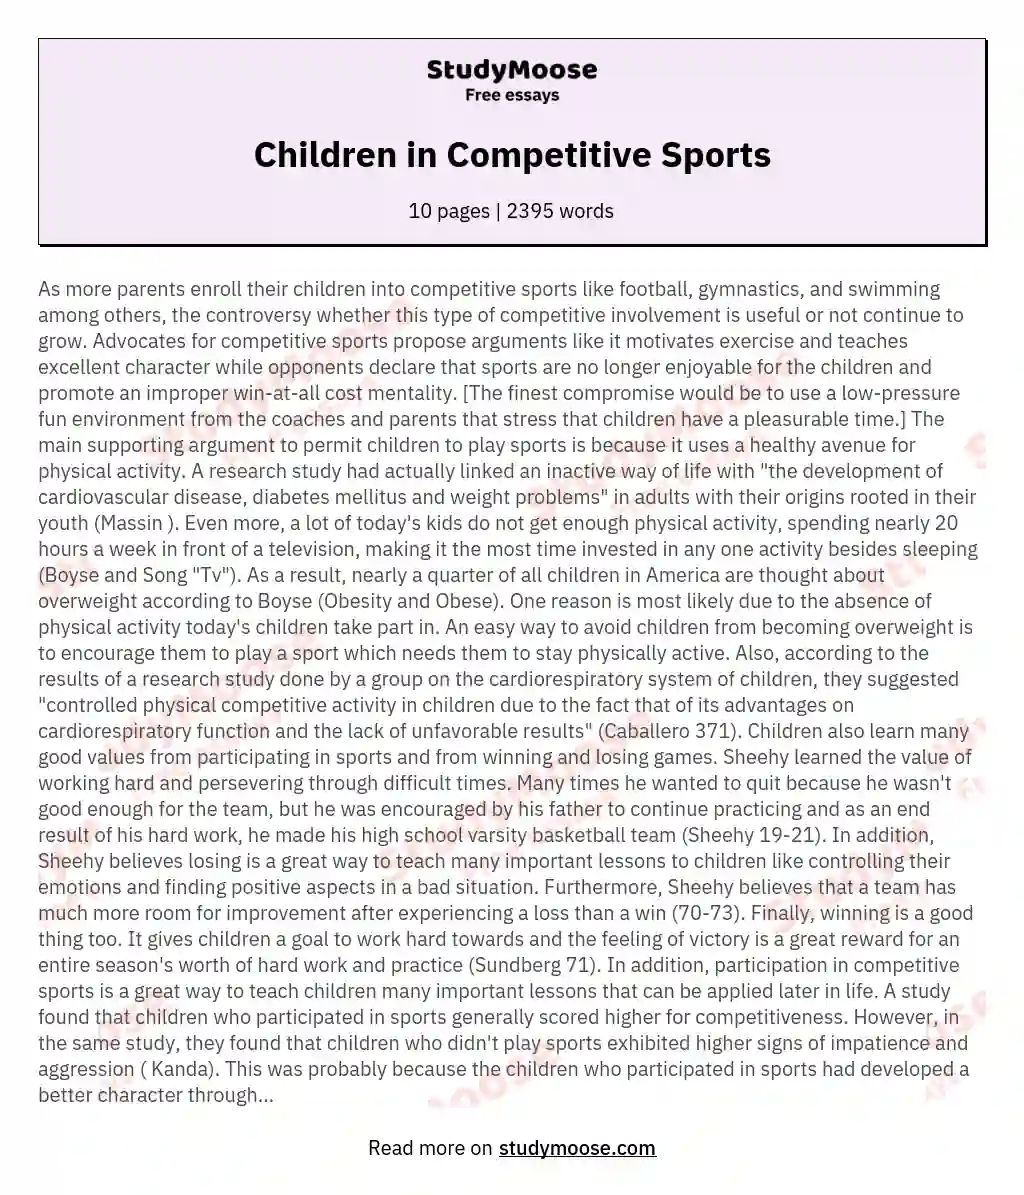 Children in Competitive Sports essay